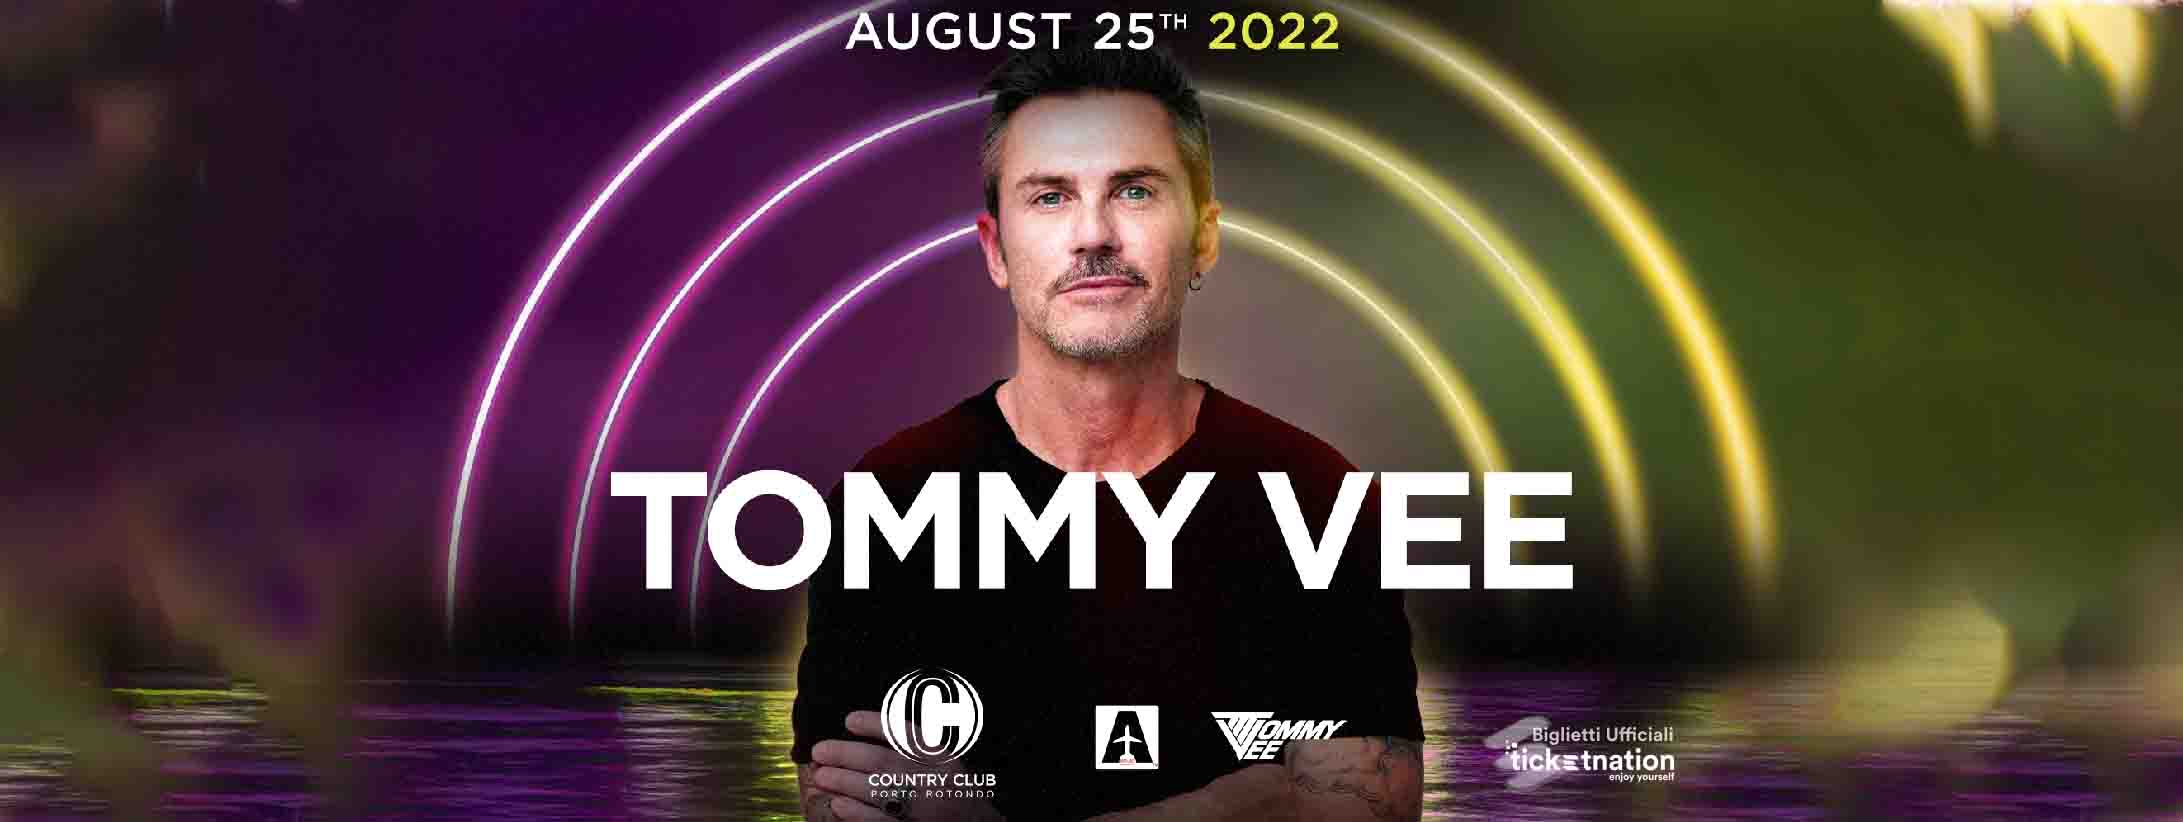 tommy-vee-country-club-portorotondo-25-agosto-2022